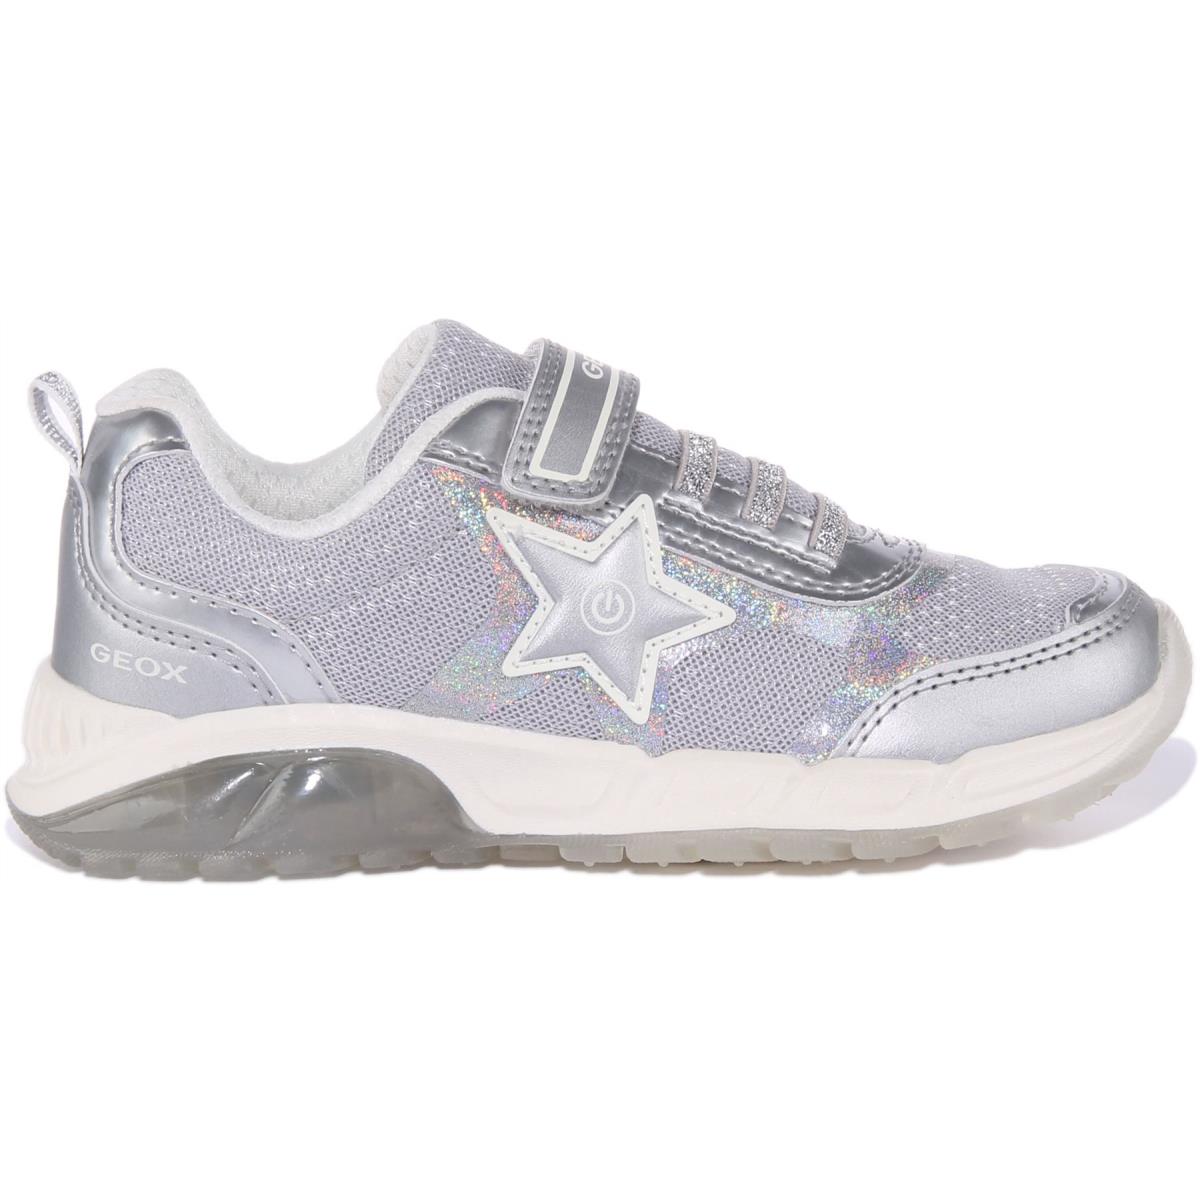 Geox J Spaziale Girls Single Strap Light Up Sneakers In Silver Size US 9C - 13C